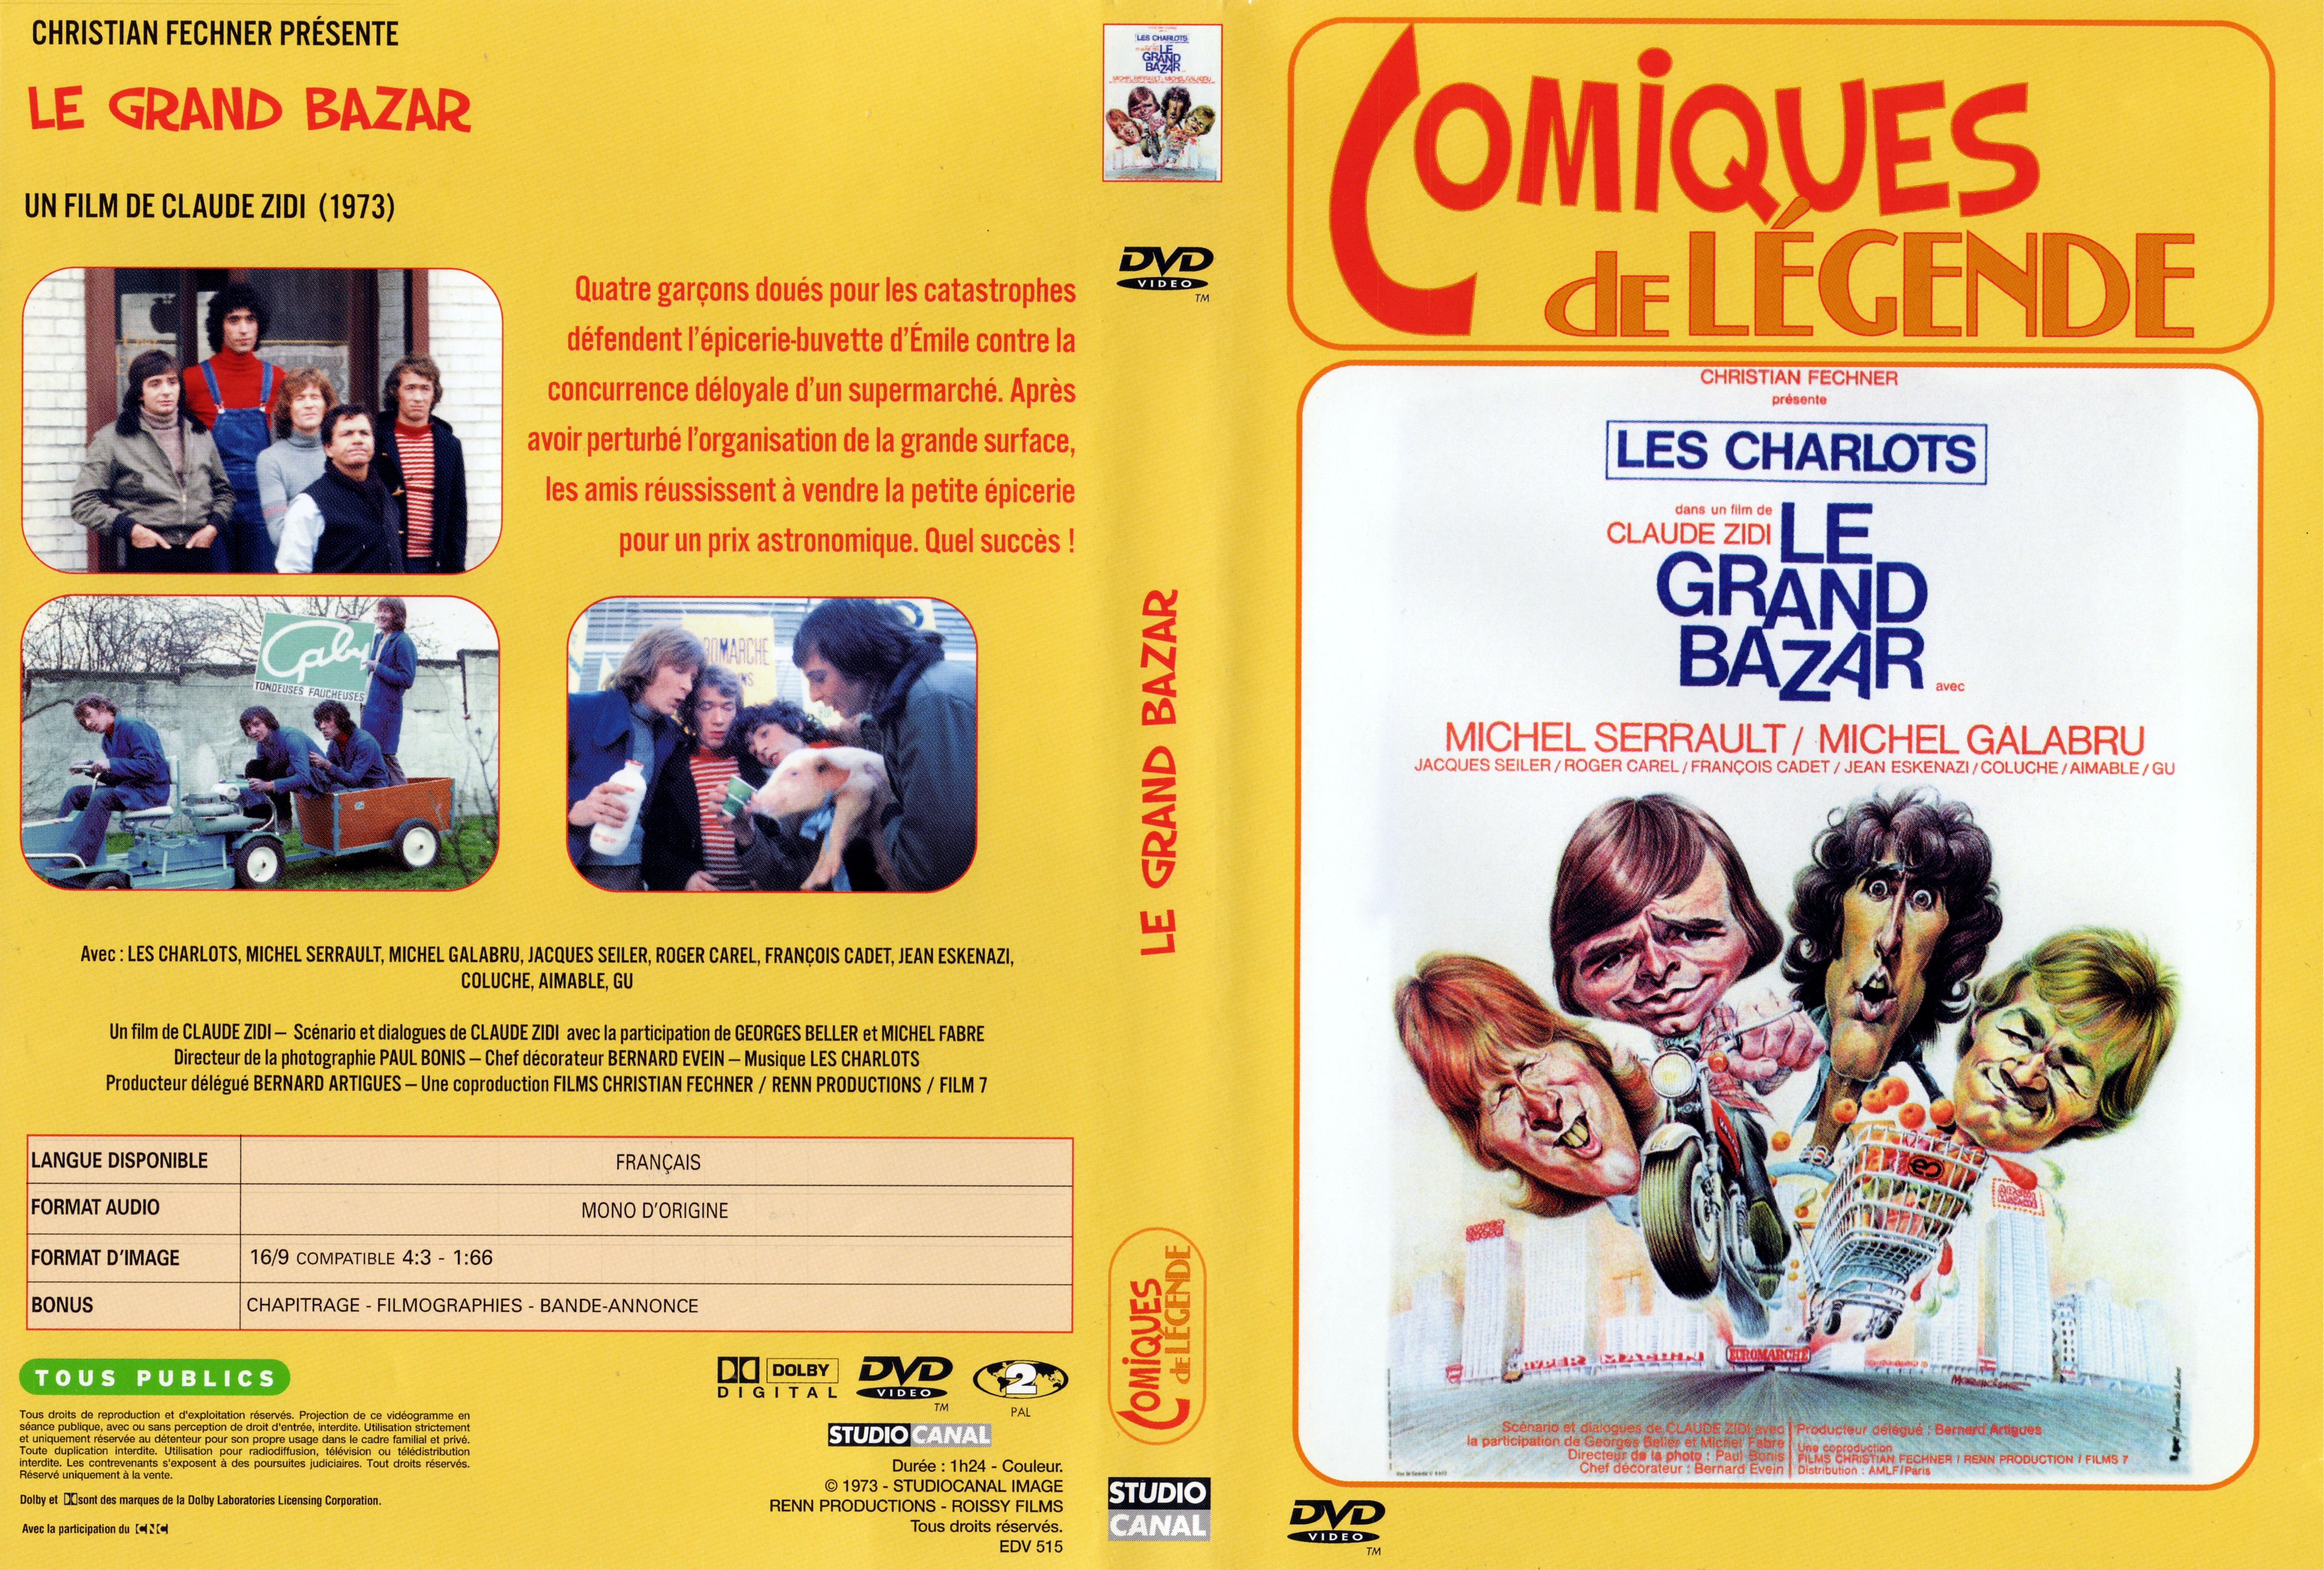 Jaquette DVD Le grand bazar v2